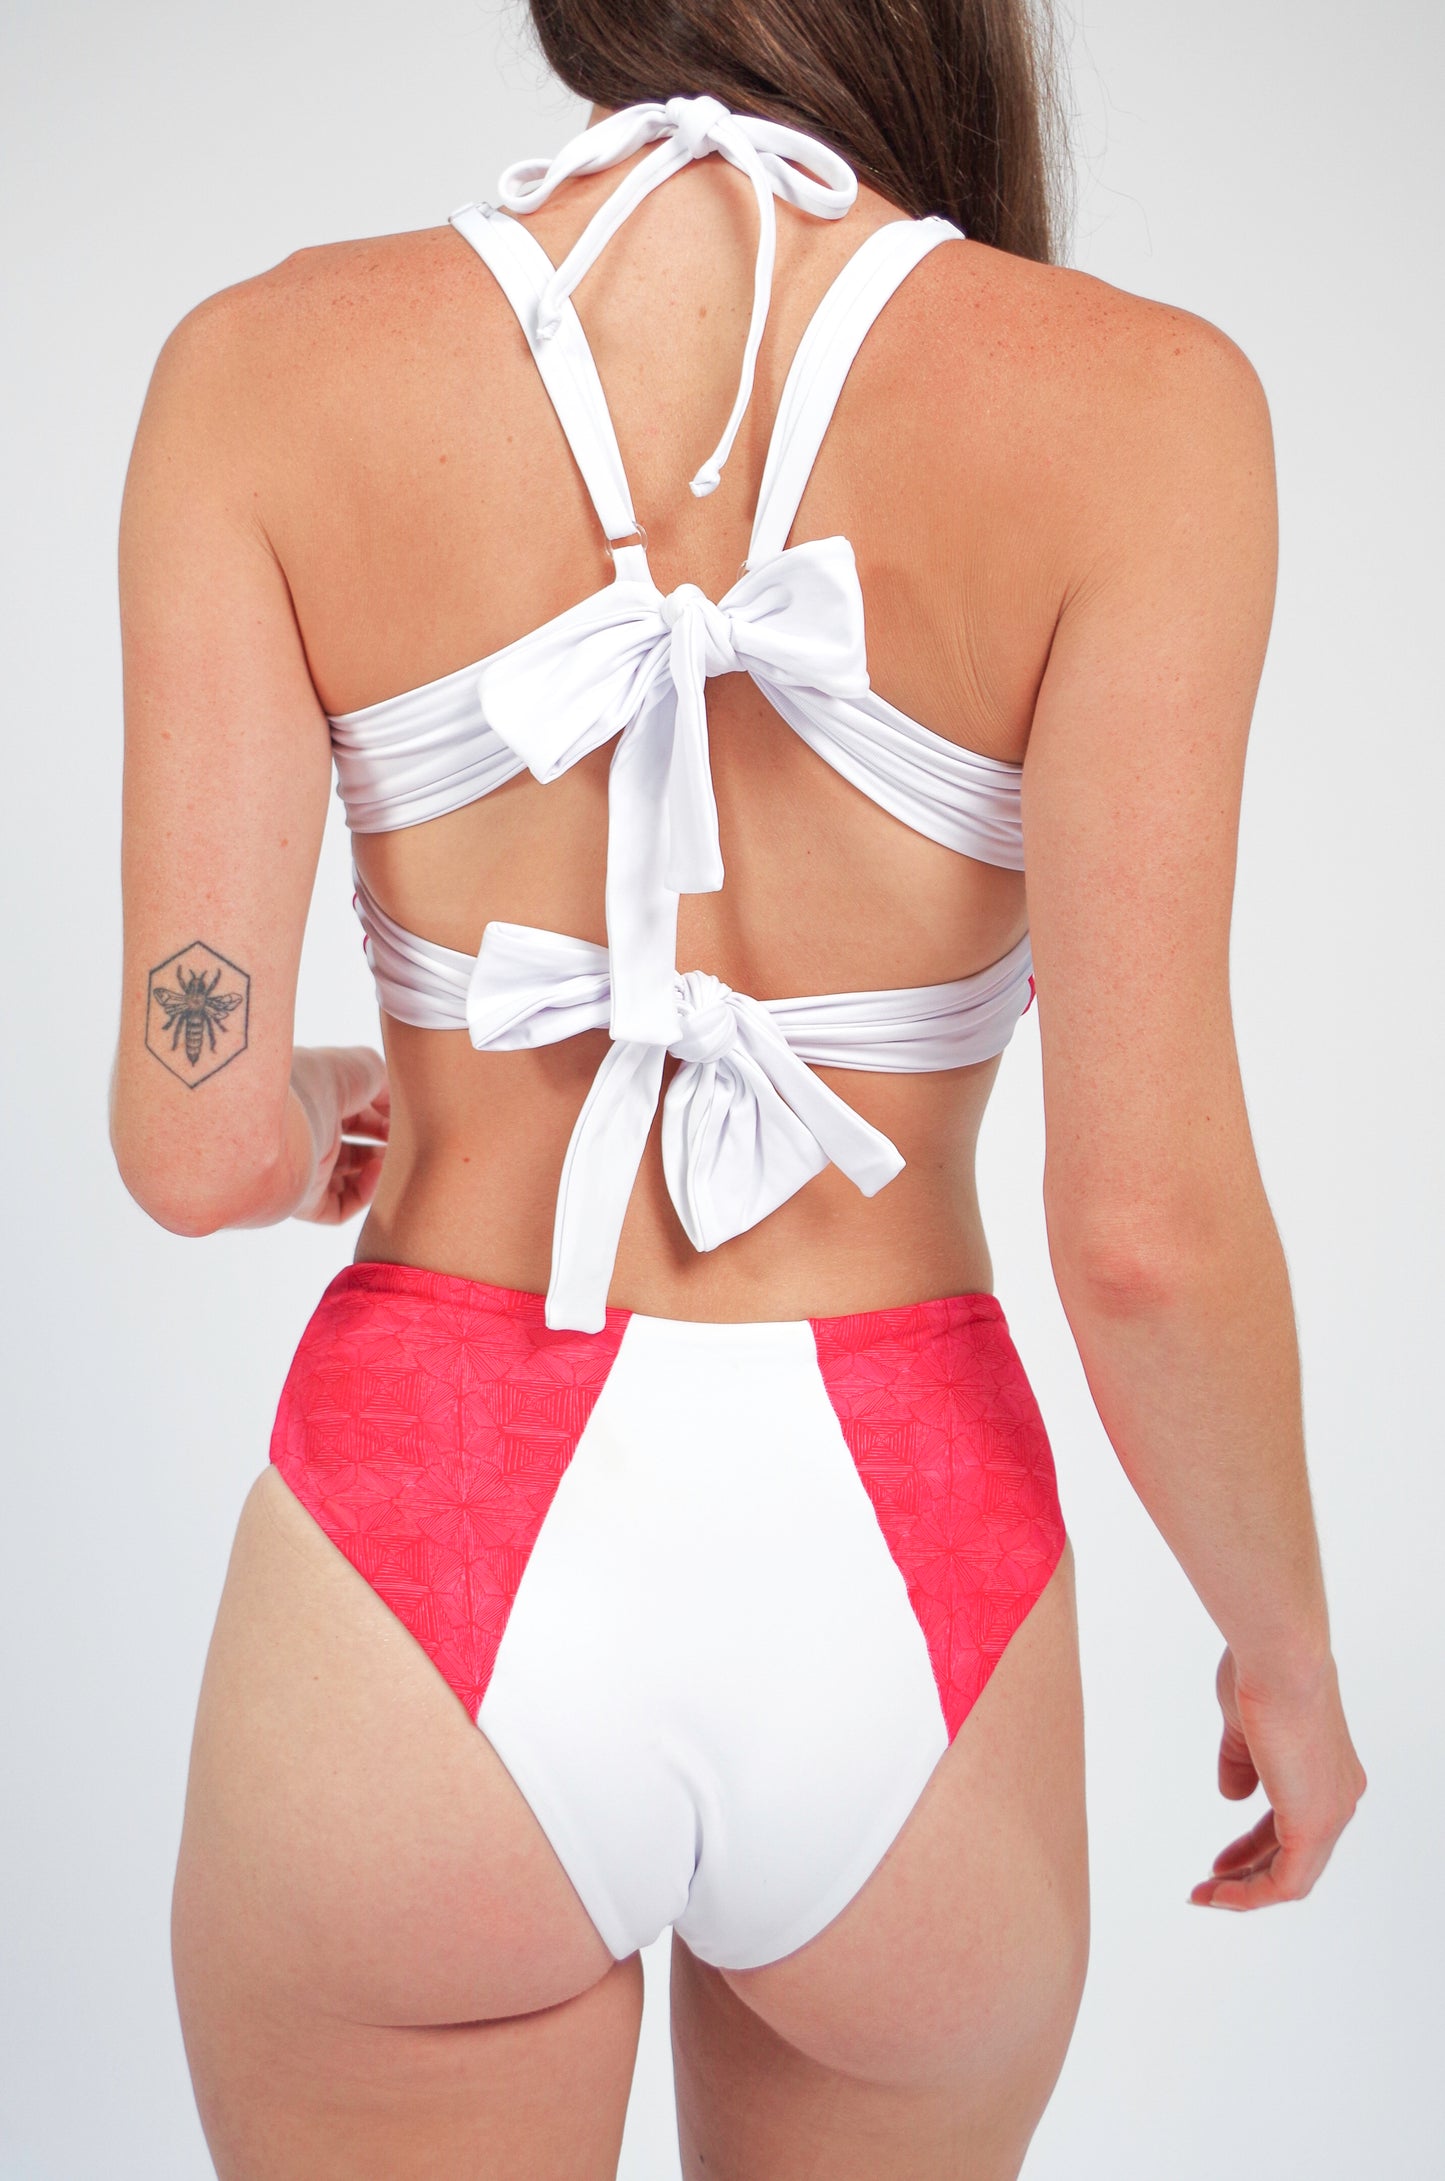 Massi bikini bottom with color-blocked tile pattern